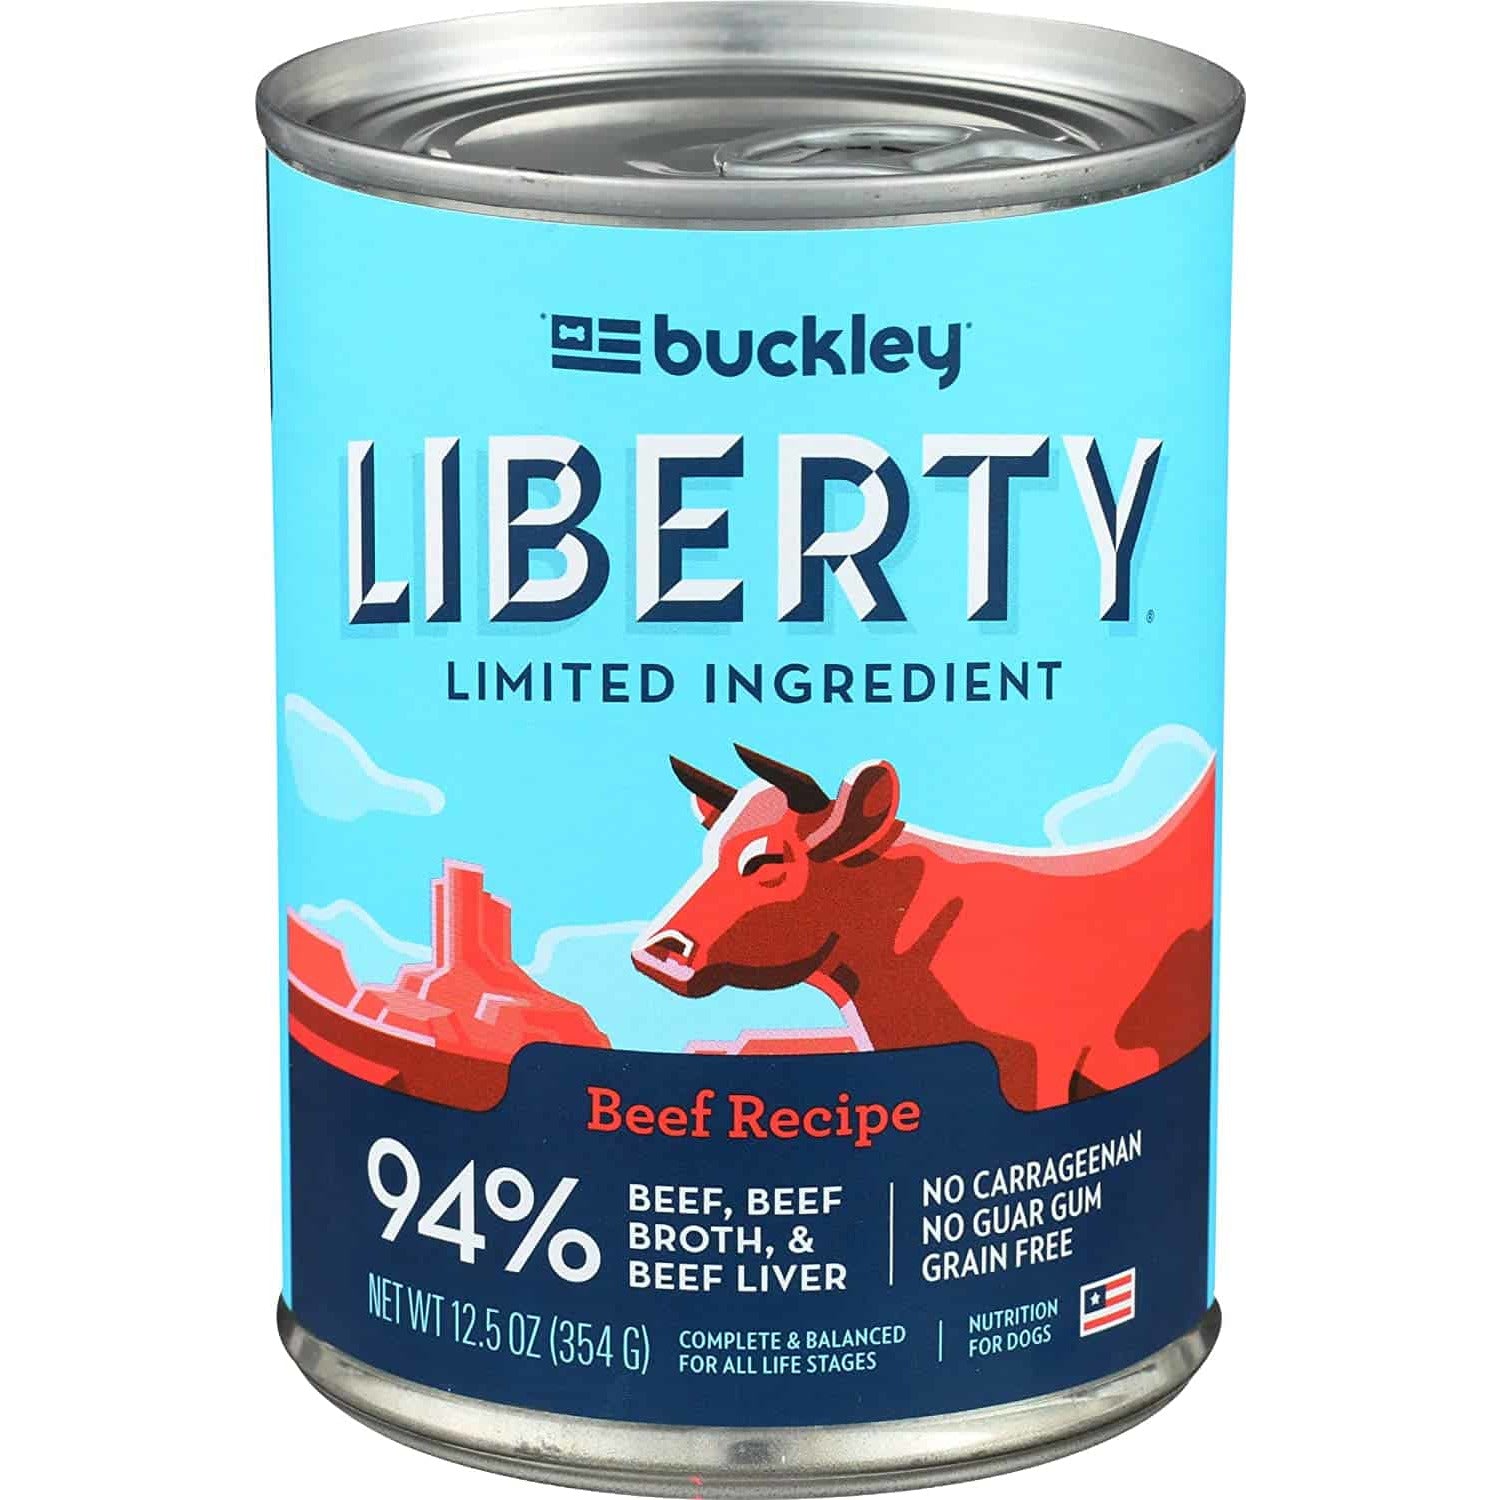 Oasis Fresh Buckley Pet, Dog Food Liberty Beef Recipe, 12.5 Oz.